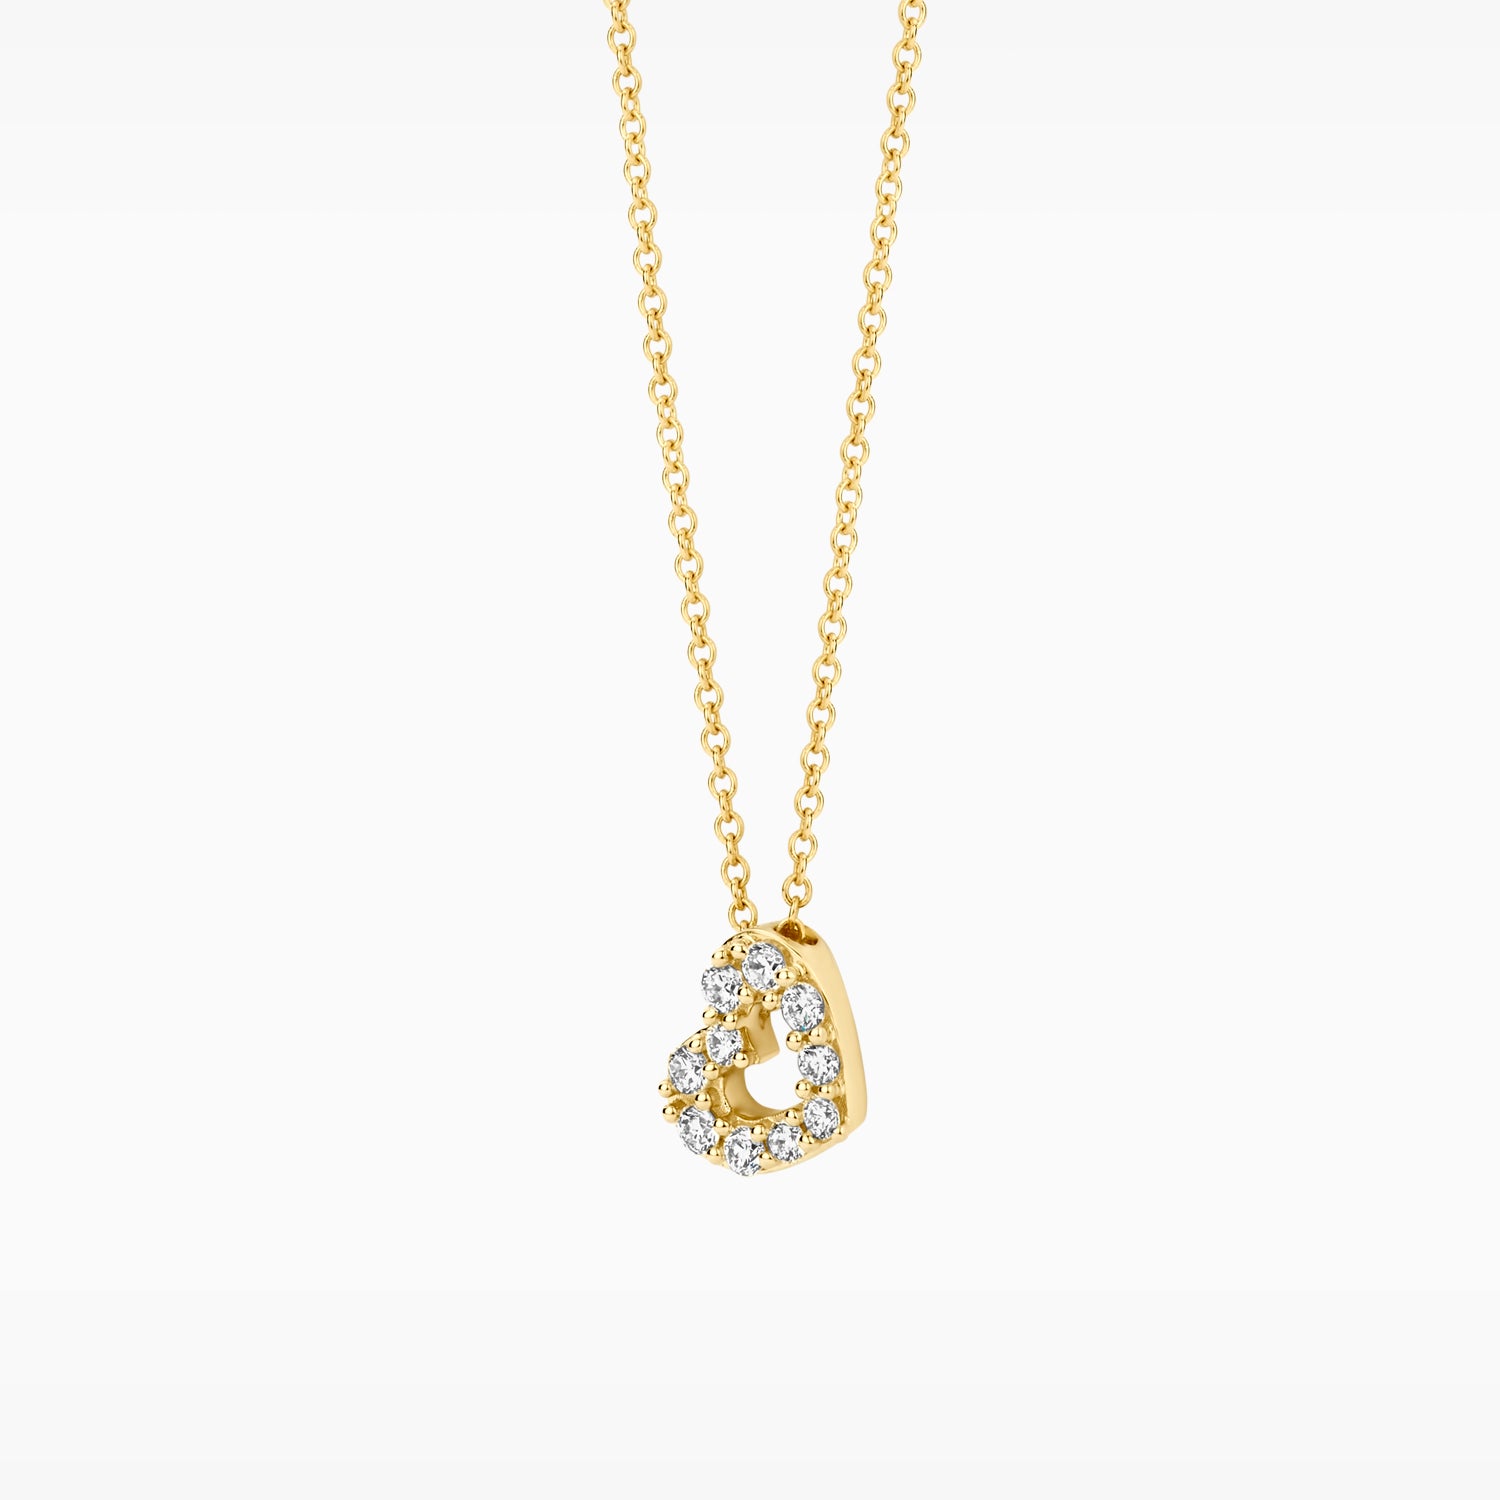 Lab diamonds necklace LG3000Y - 14k Yellow gold